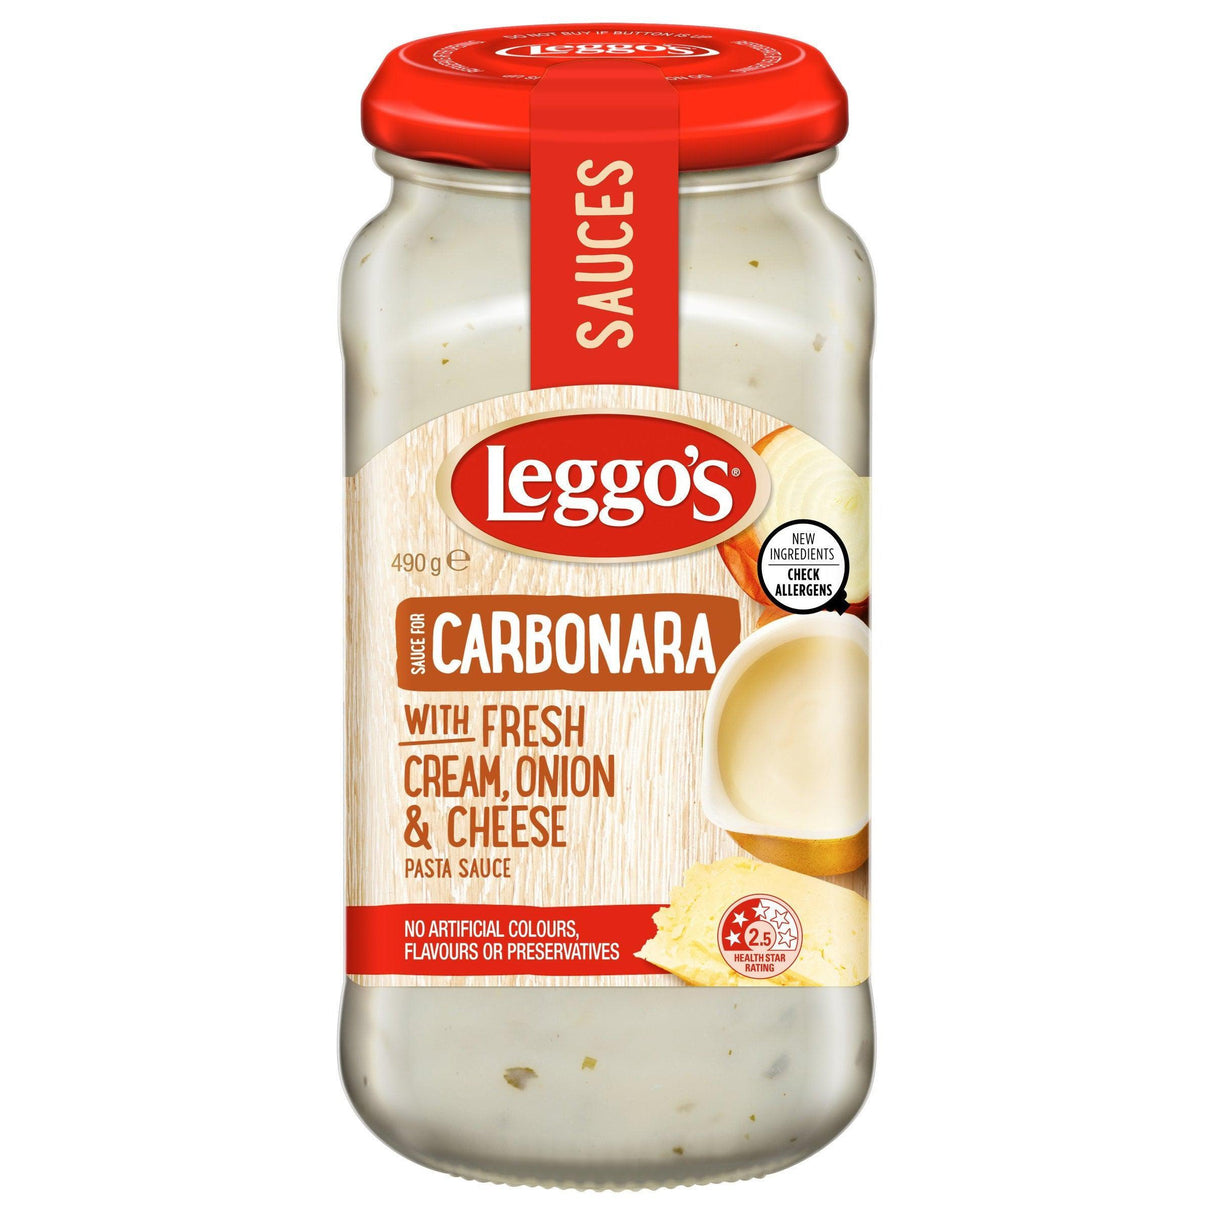 Leggos Carbonara With Fresh Cream Onion & Cheese Pasta Sauce 490g